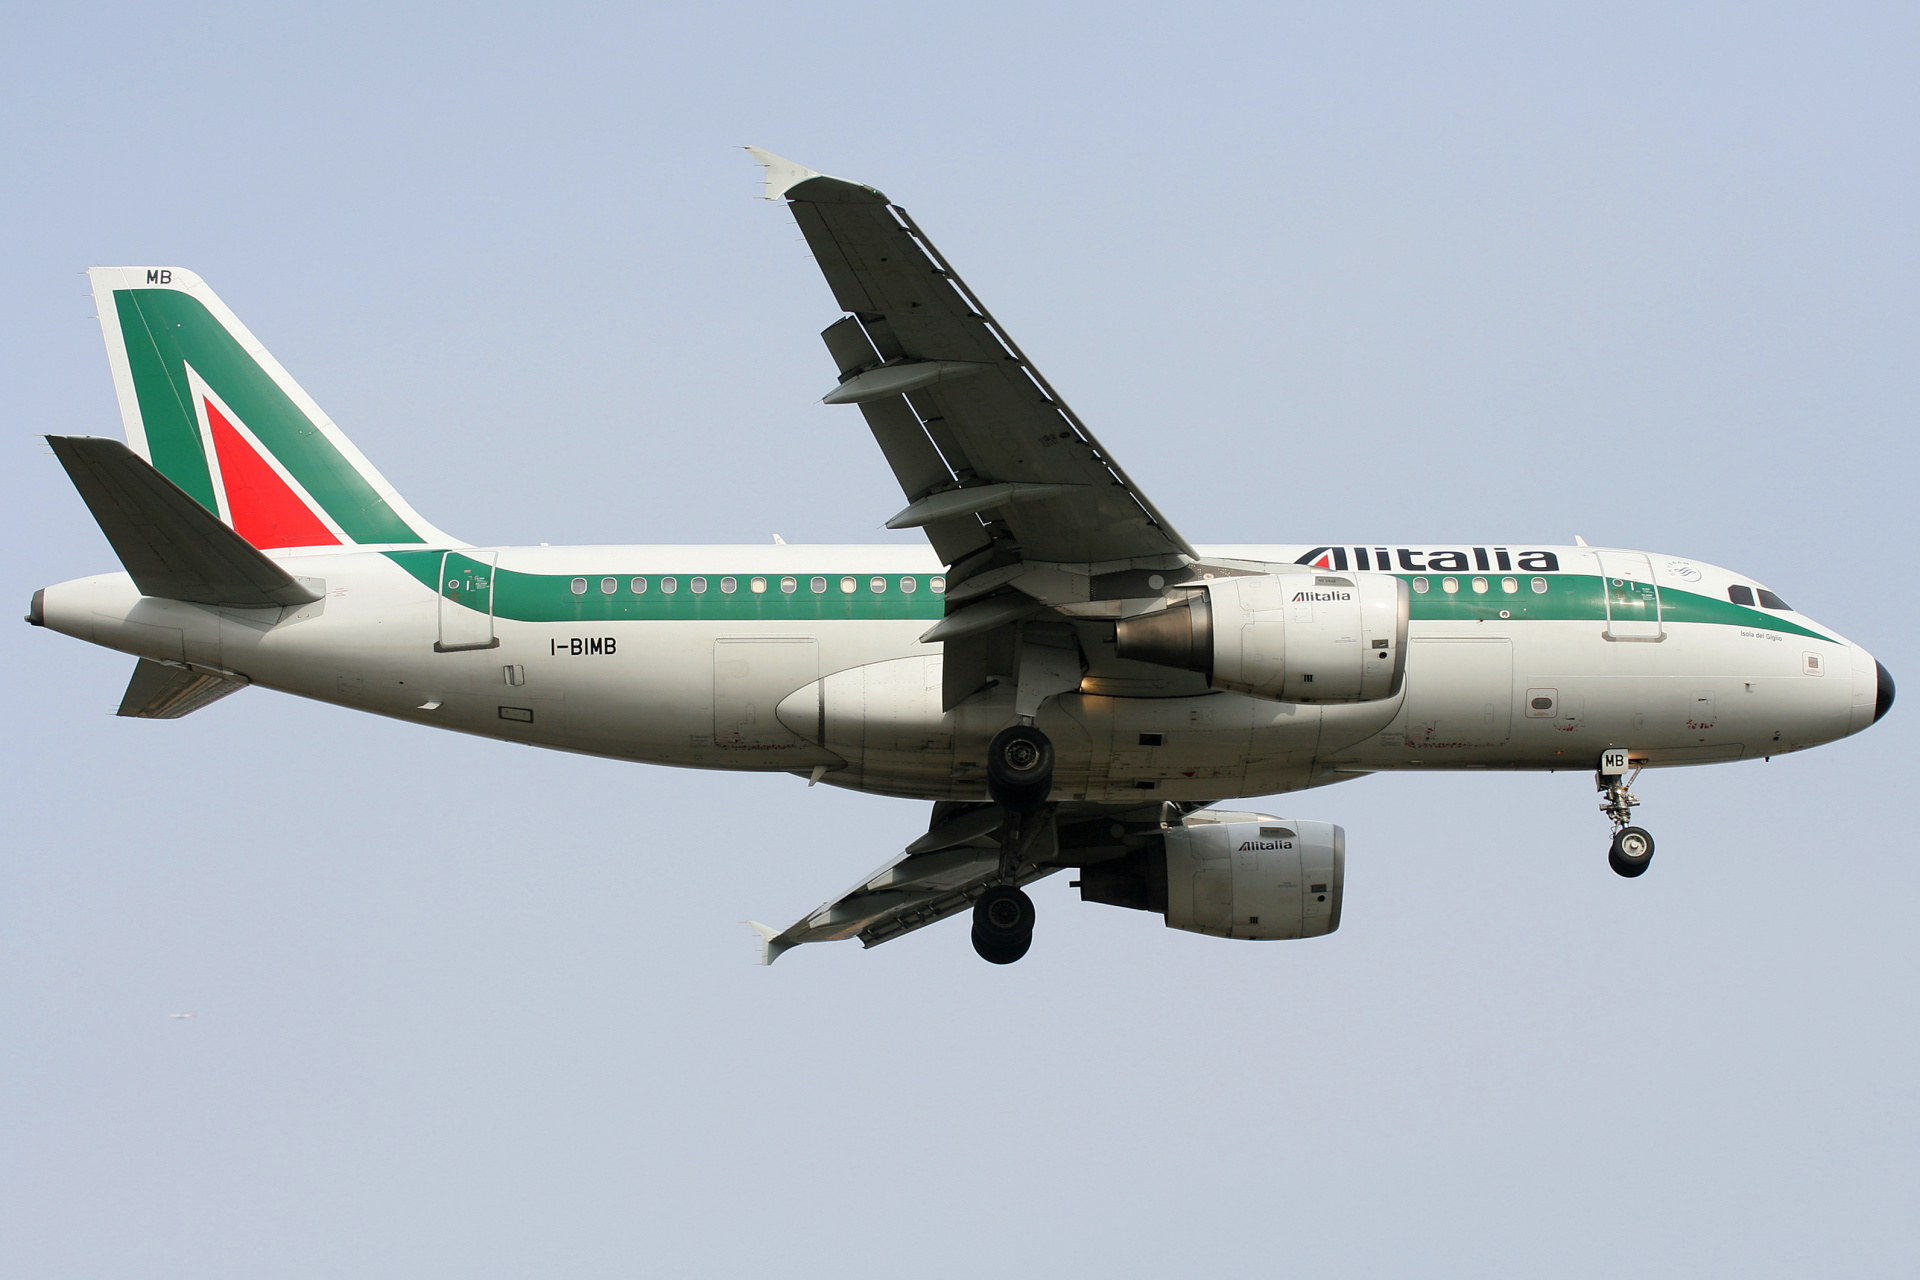 I-BIMB (Aircraft » EPWA Spotting » Airbus A319-100 » Alitalia)